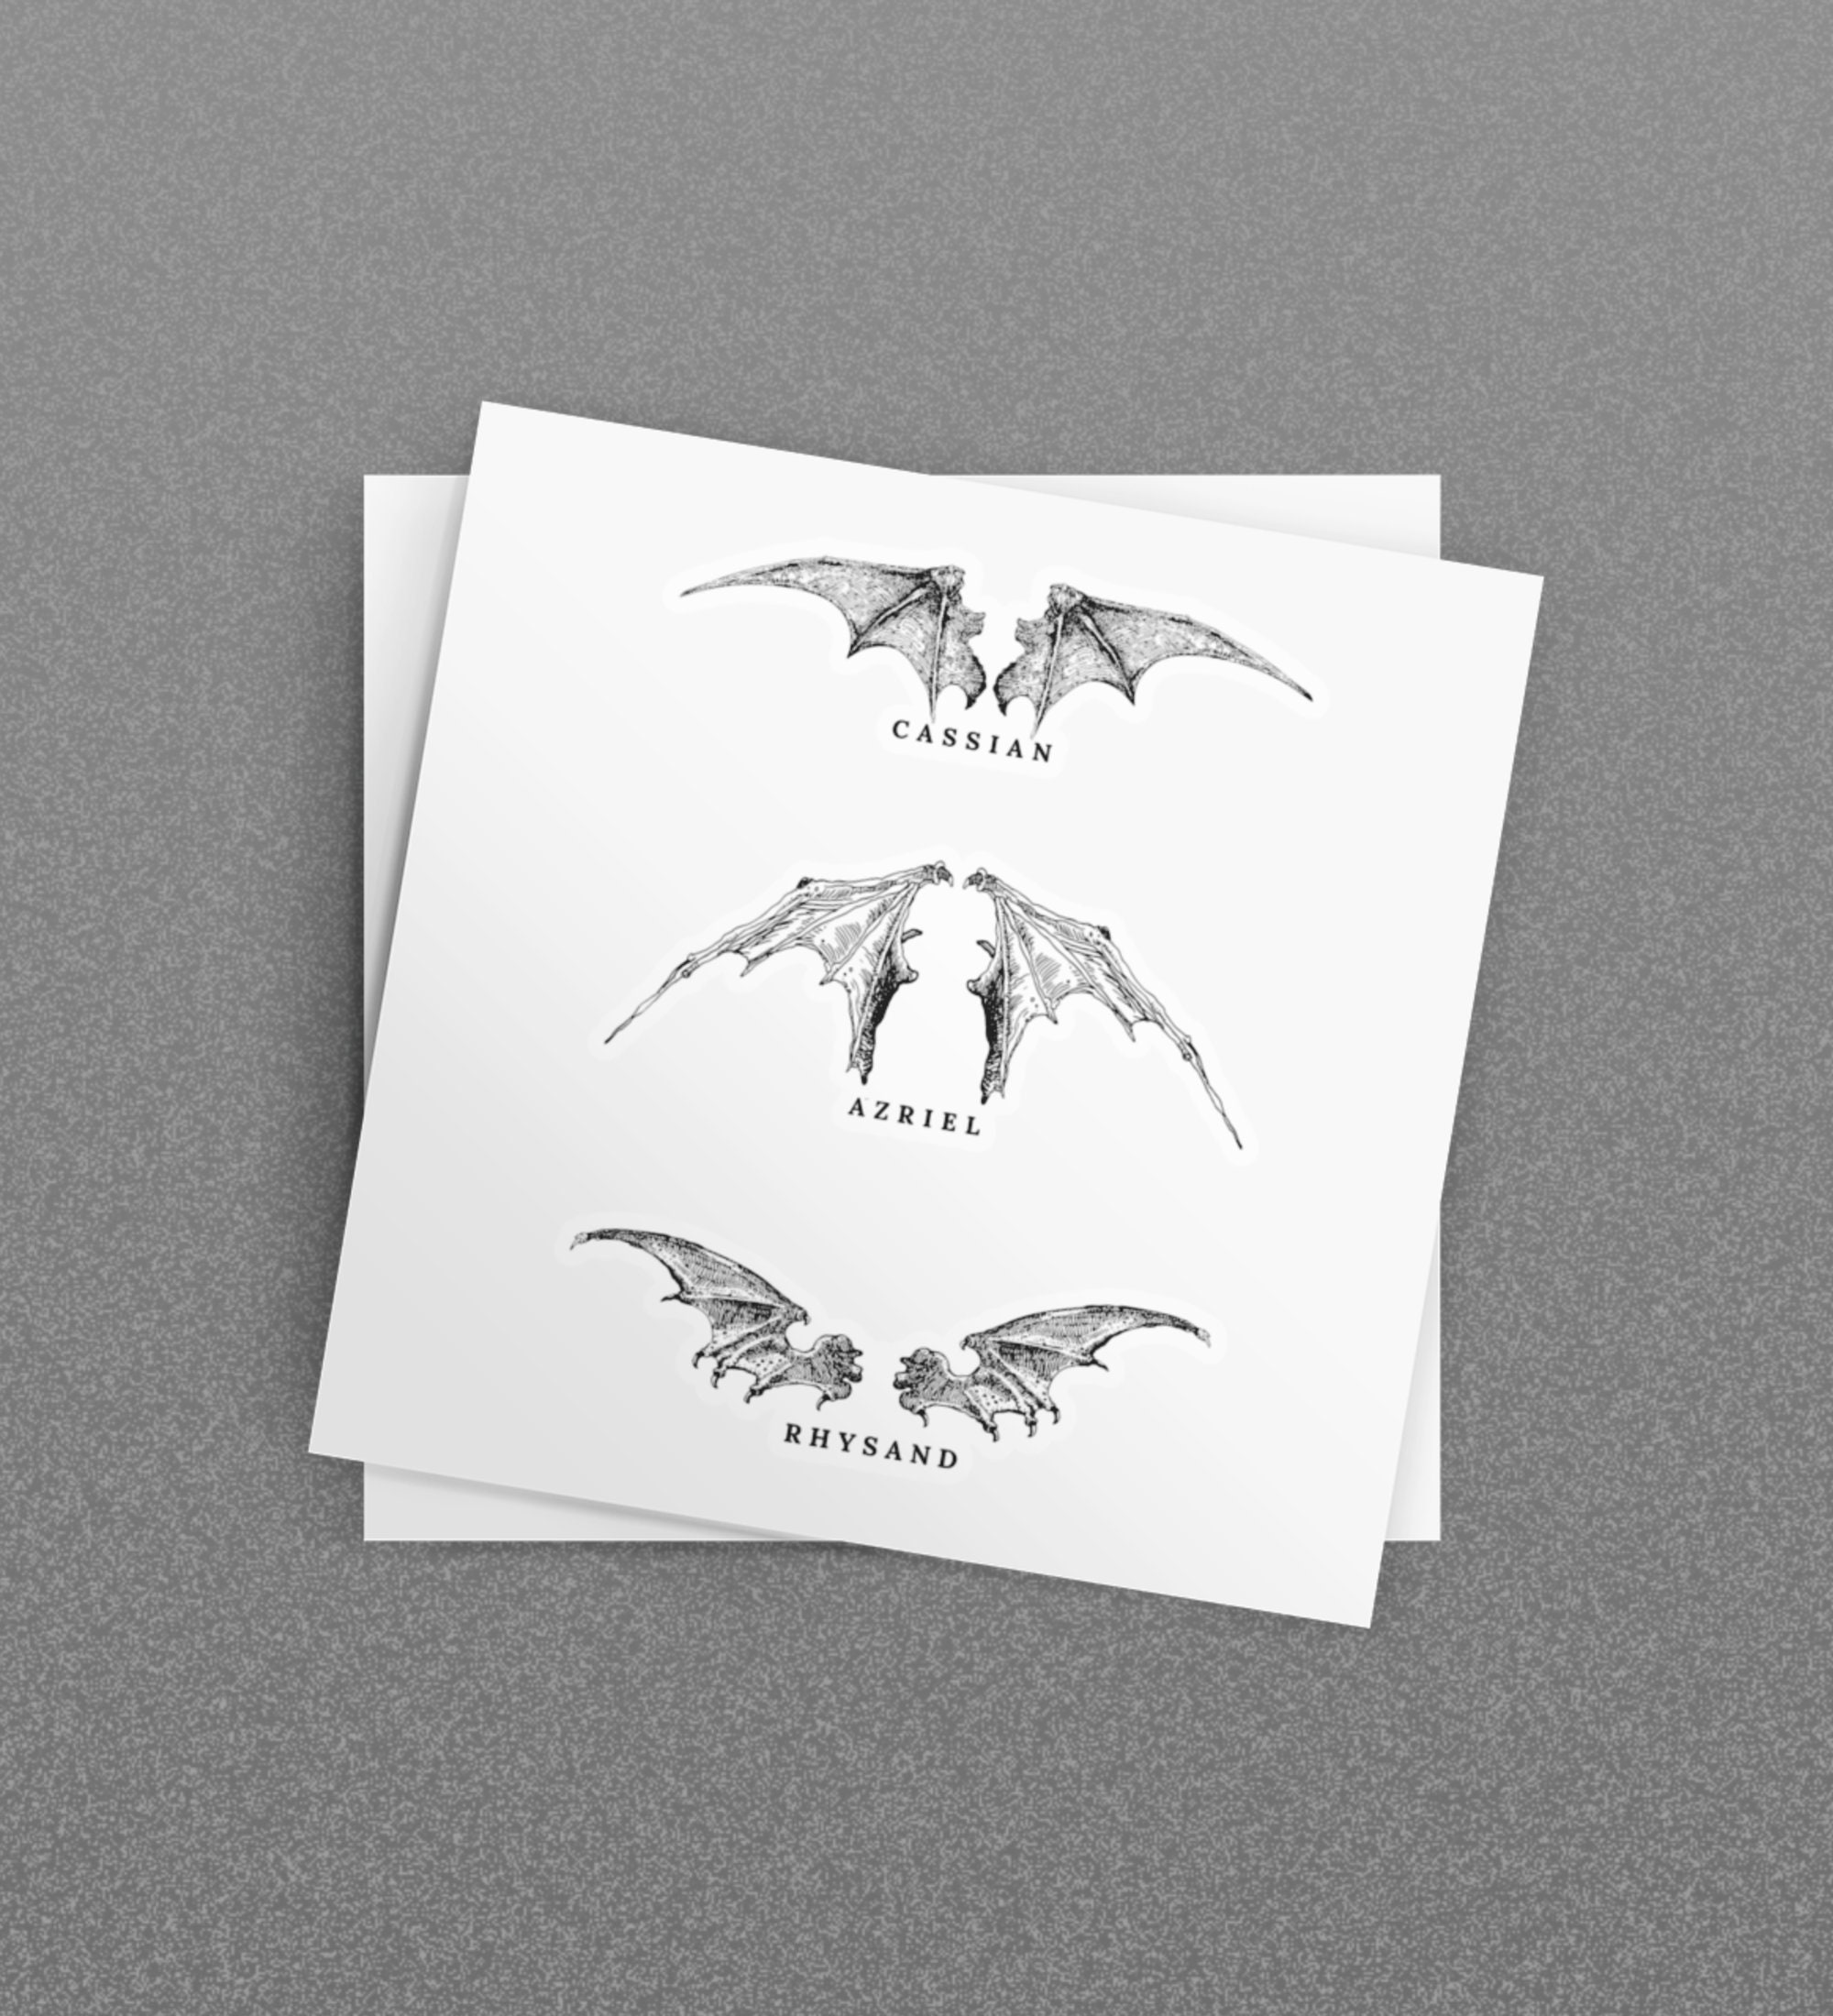 ACOTAR Bat Boys Sticker, Illyrian Squad Cassian Rhysand Azriel, Illyrian  Warriors Vinyl Sticker, A Court of Thorns and Roses Sticker, ACOTAR 